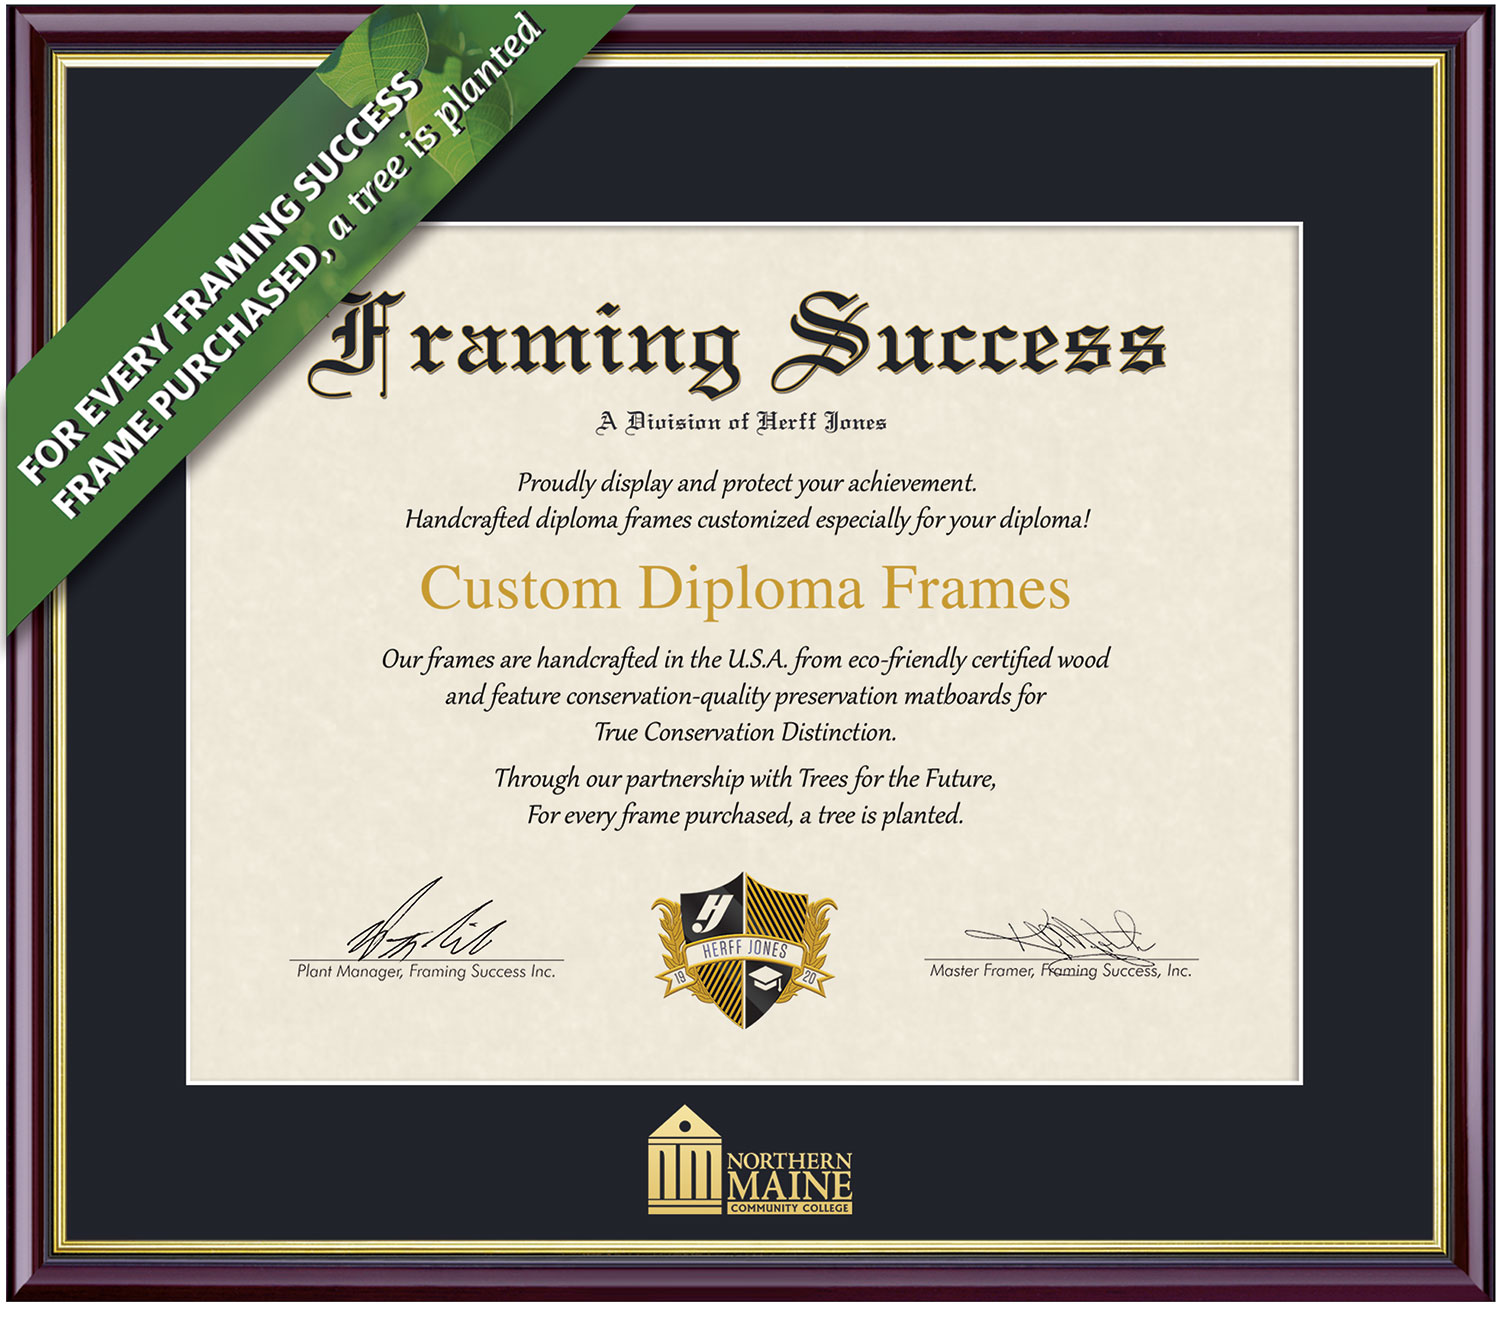 Framing Success 8.5 x 11 Academic Gold Embossed School Name Associates Diploma Frame